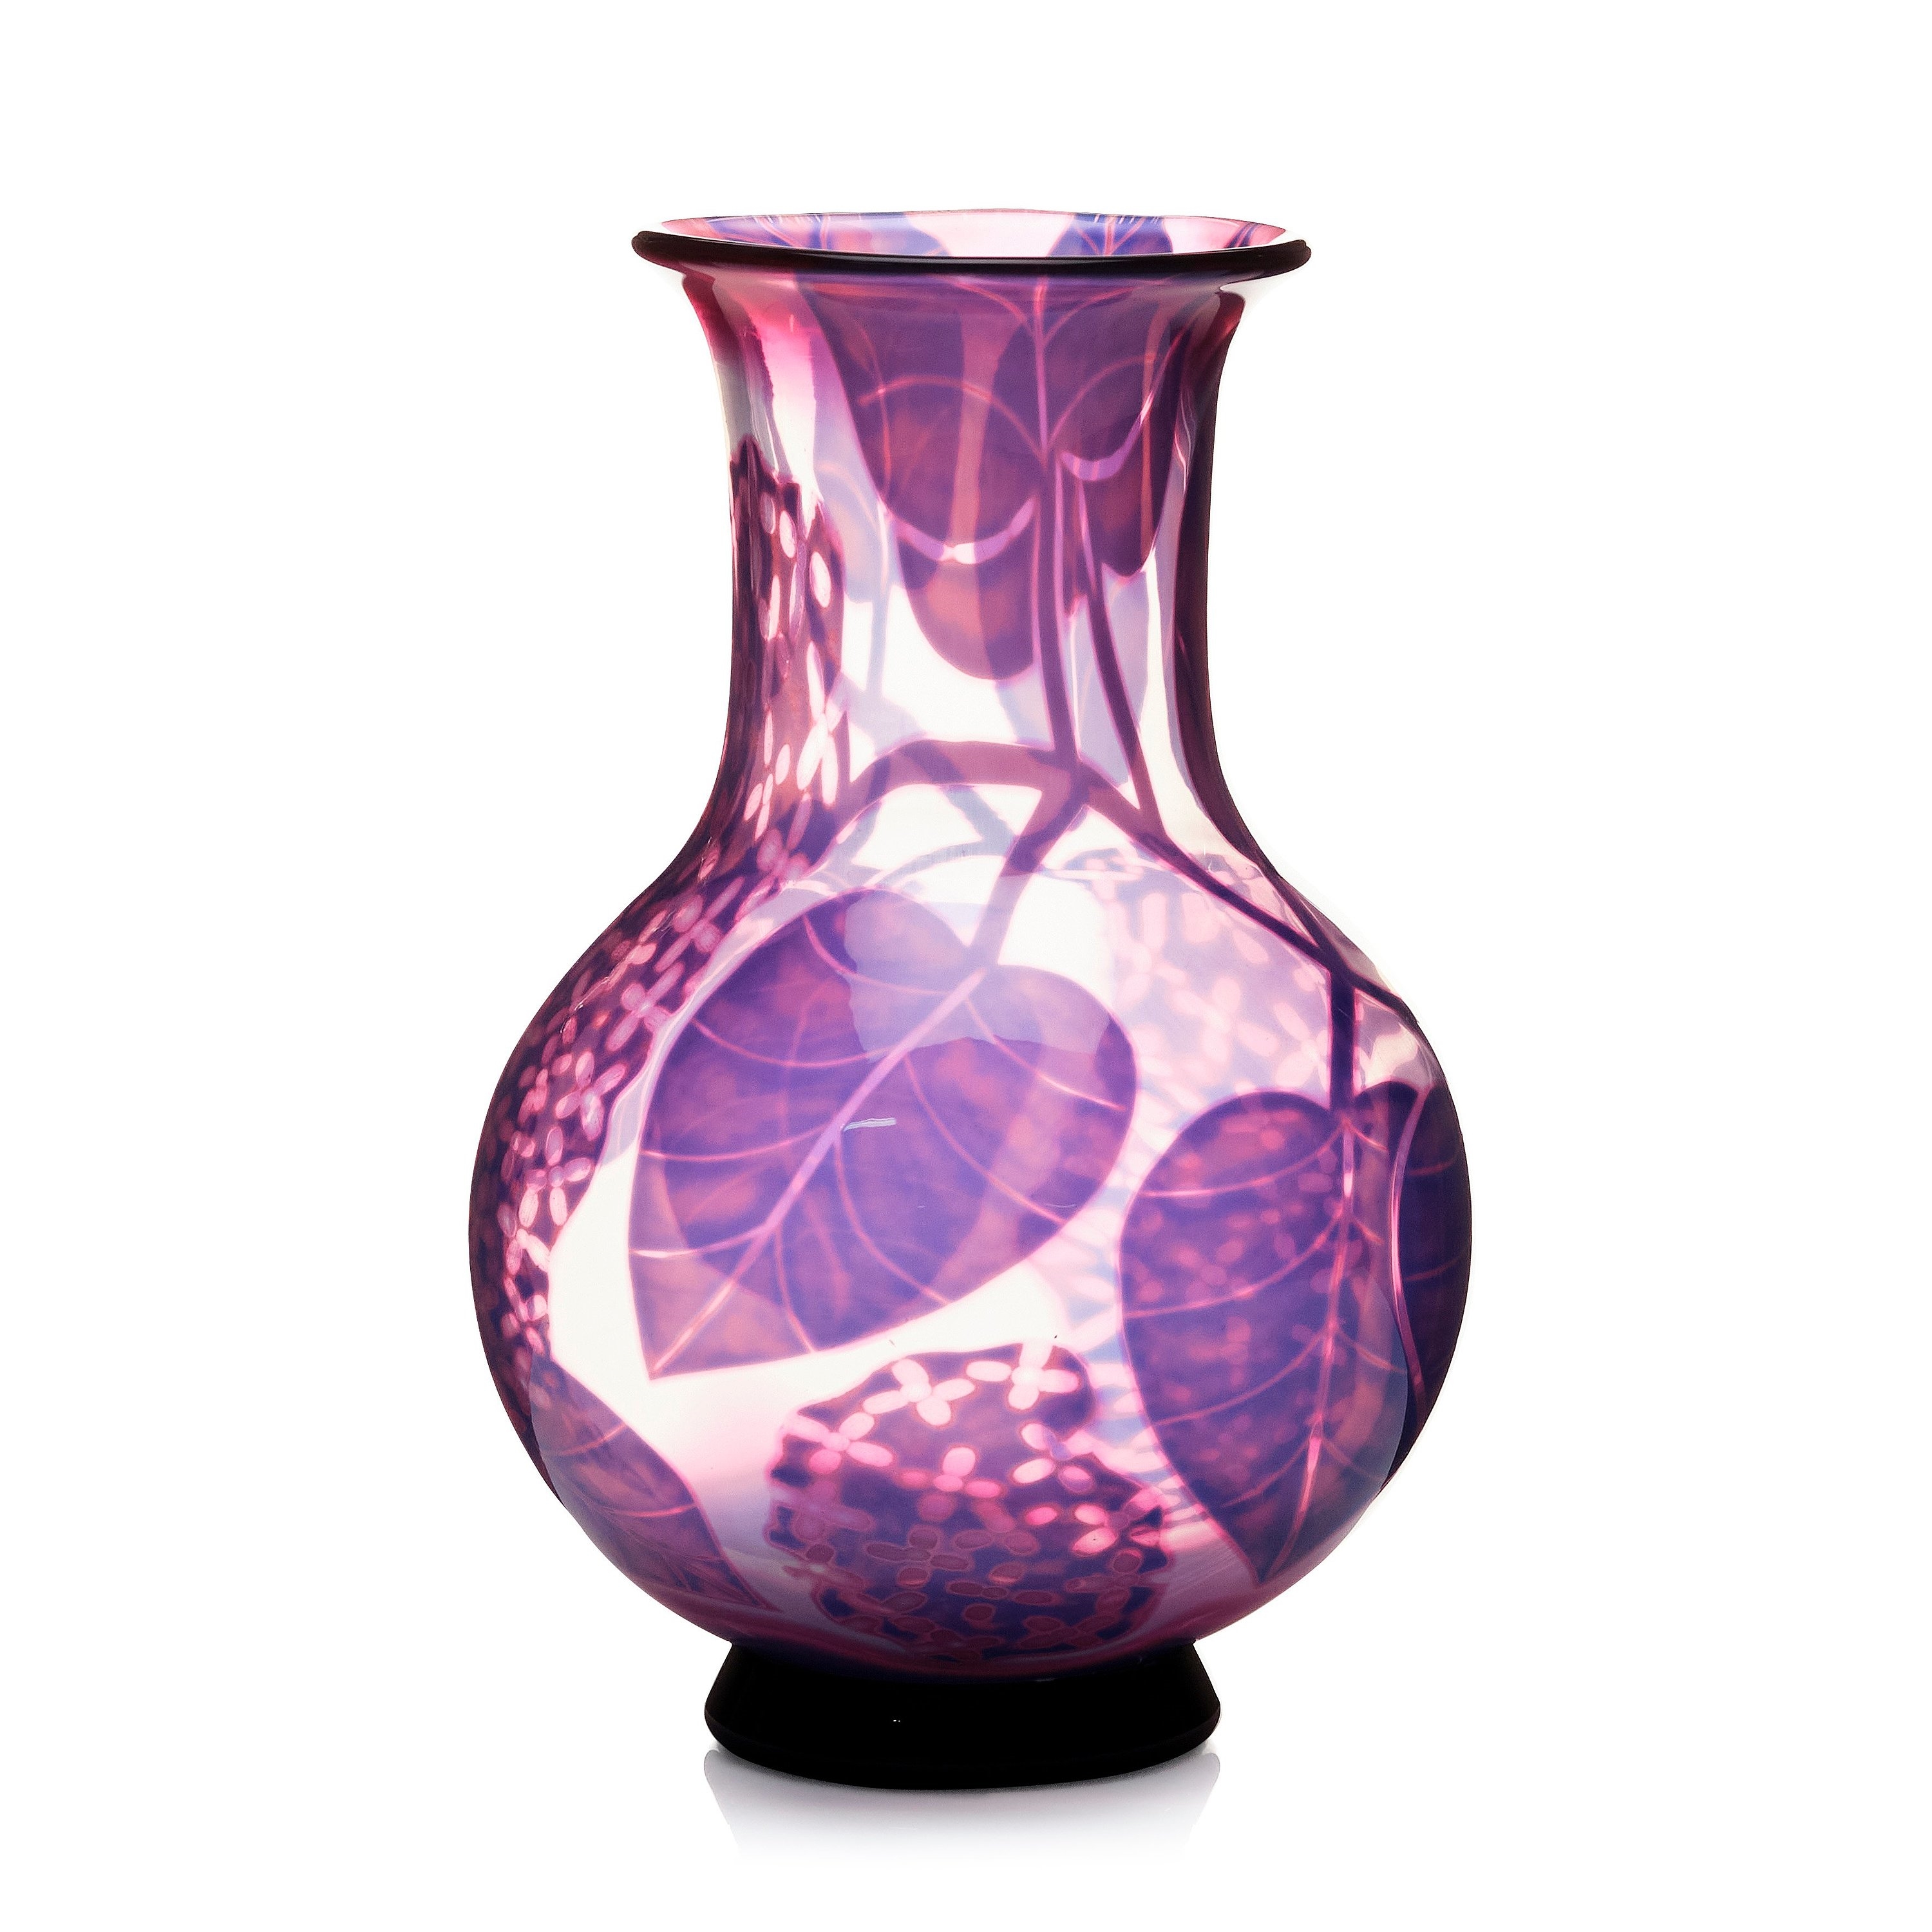 A 'graal' glass vase by Eva Englund, 1983